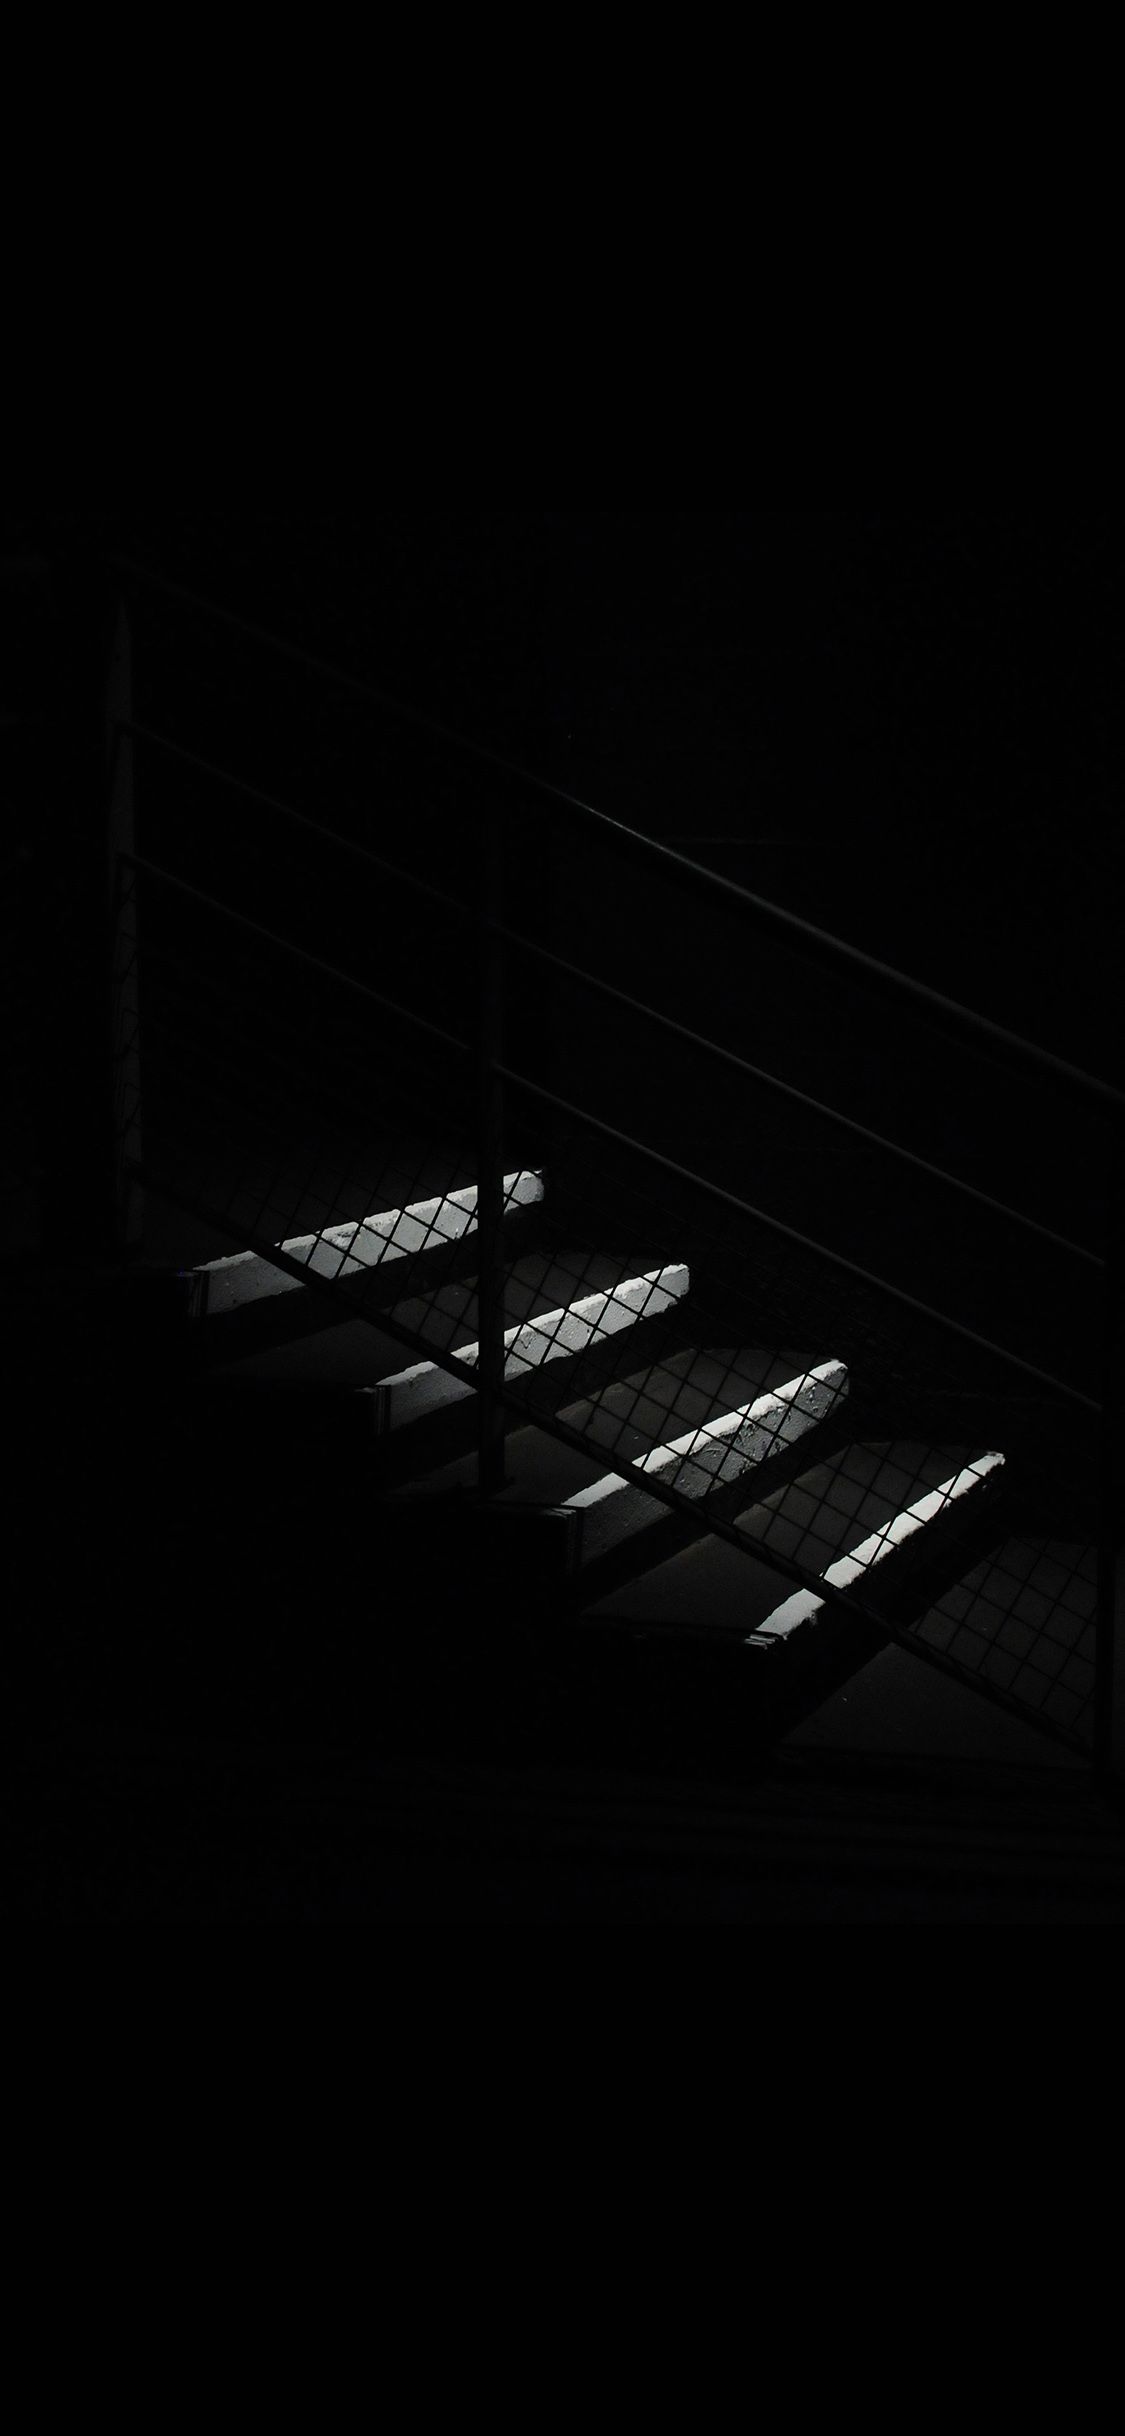 iPhone X wallpaper. dark stairs minimal simple city bw